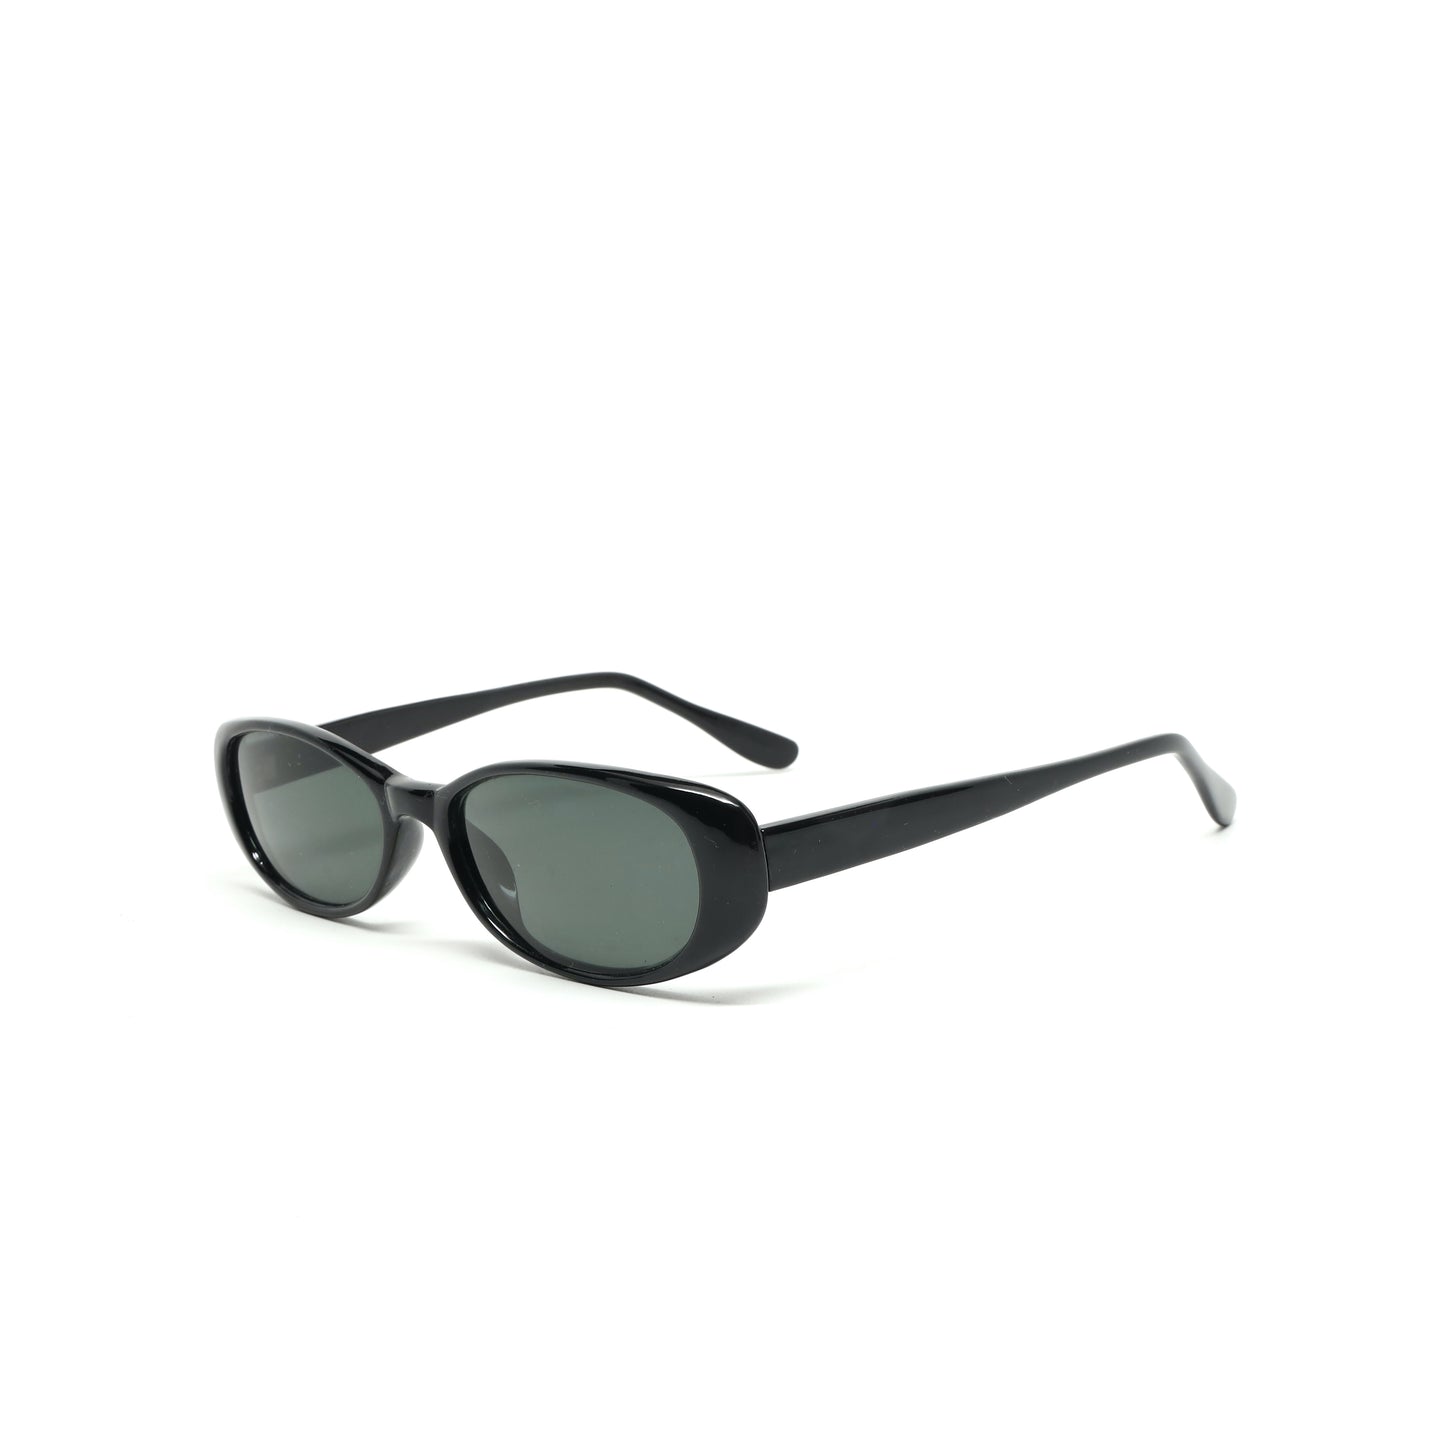 //Style 97// Deluxe Vintage 90s Standard Original Oval Sunglasses - Black